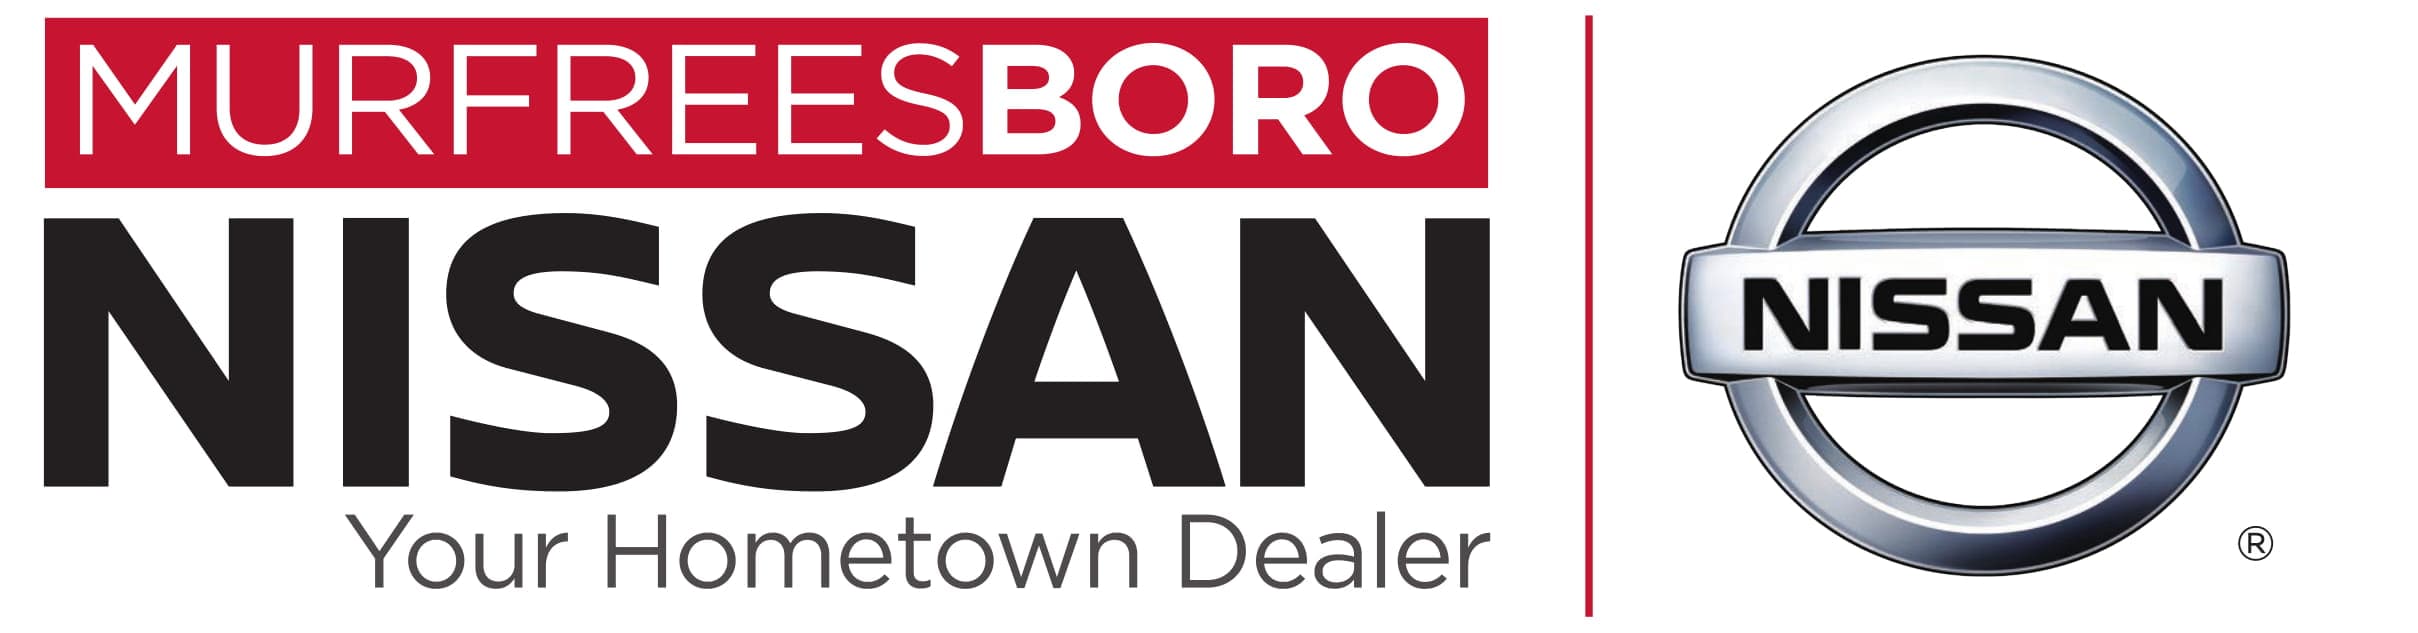 Dealership Logo - Murfreesboro Nissan: Dealership near Nashville & Franklin, TN